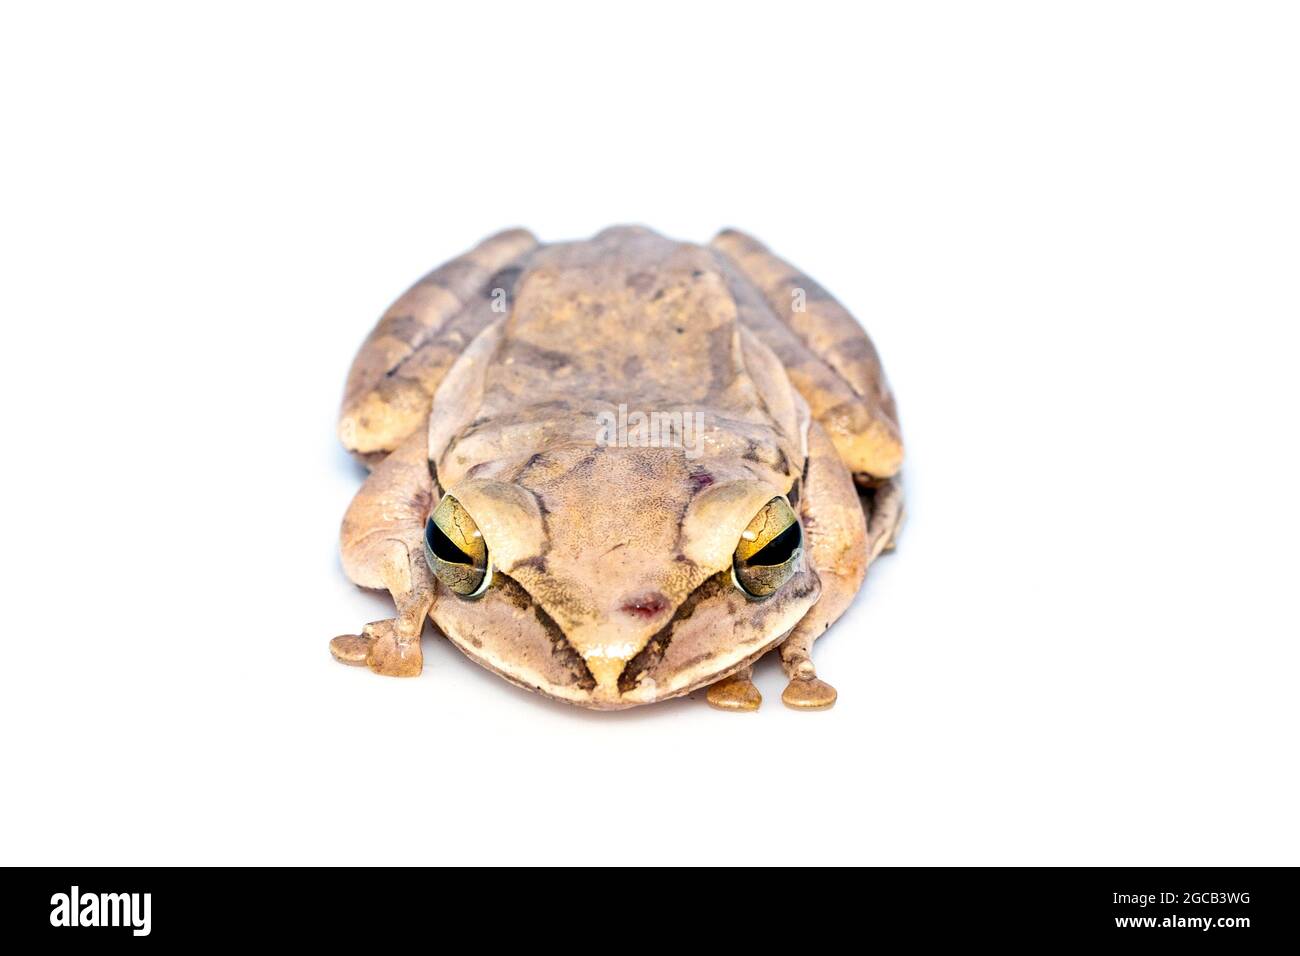 Image of Common tree frog, four-lined tree frog, golden tree frog, (Polypedates leucomystax) on white background. Animal. Amphibians. Stock Photo